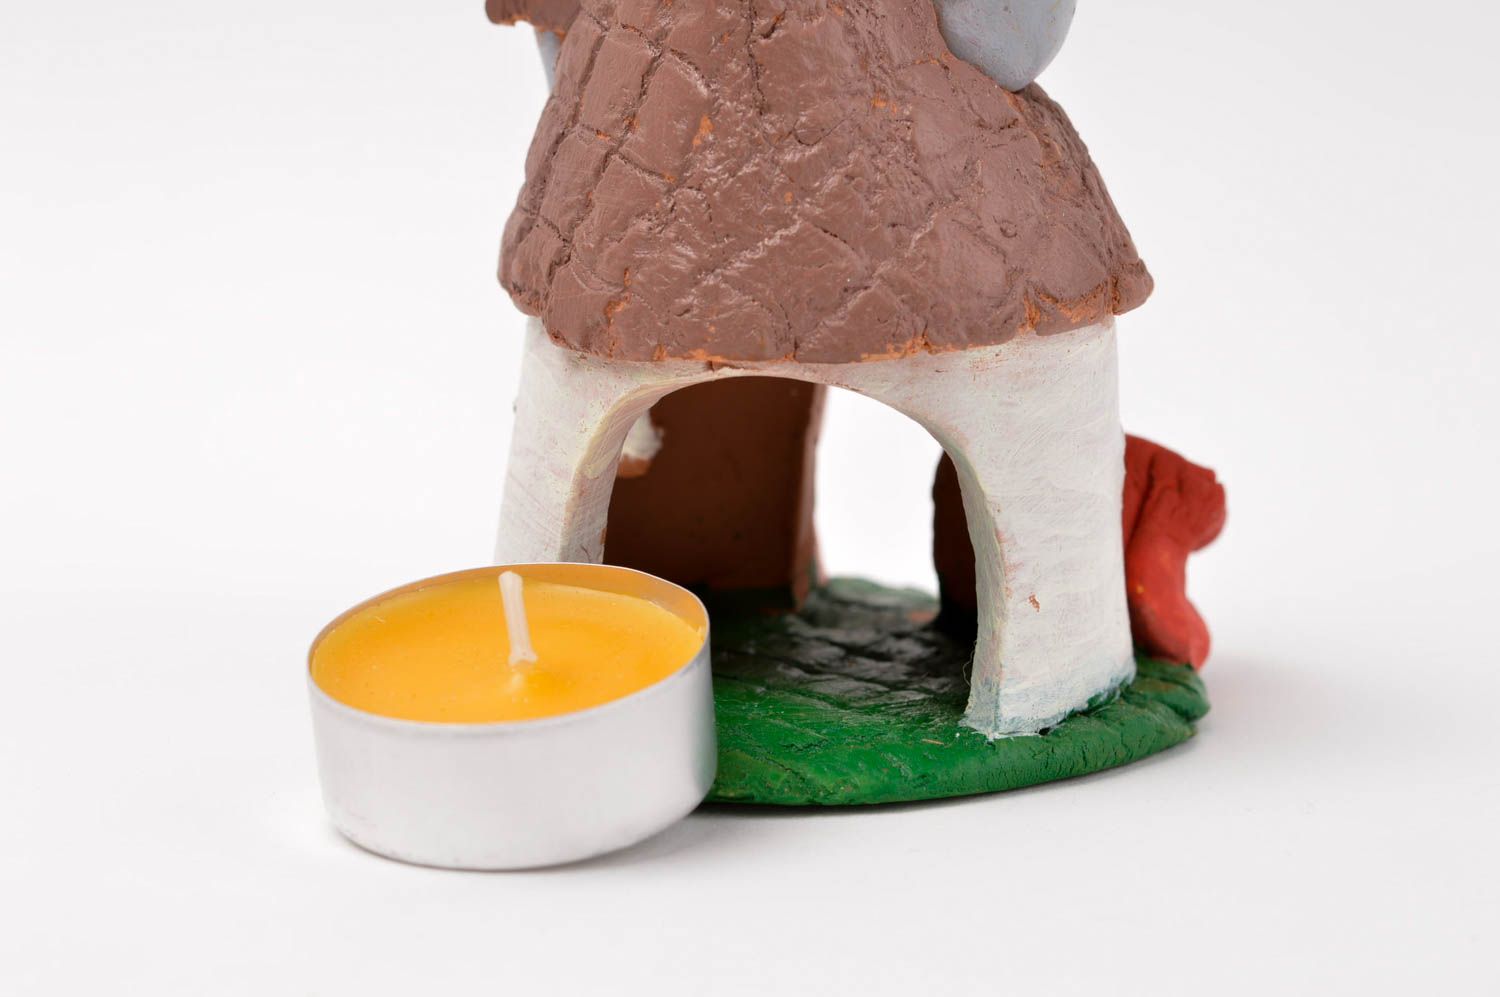 5 inch dwarf house ceramic tin candle holder 0,6 lb photo 5